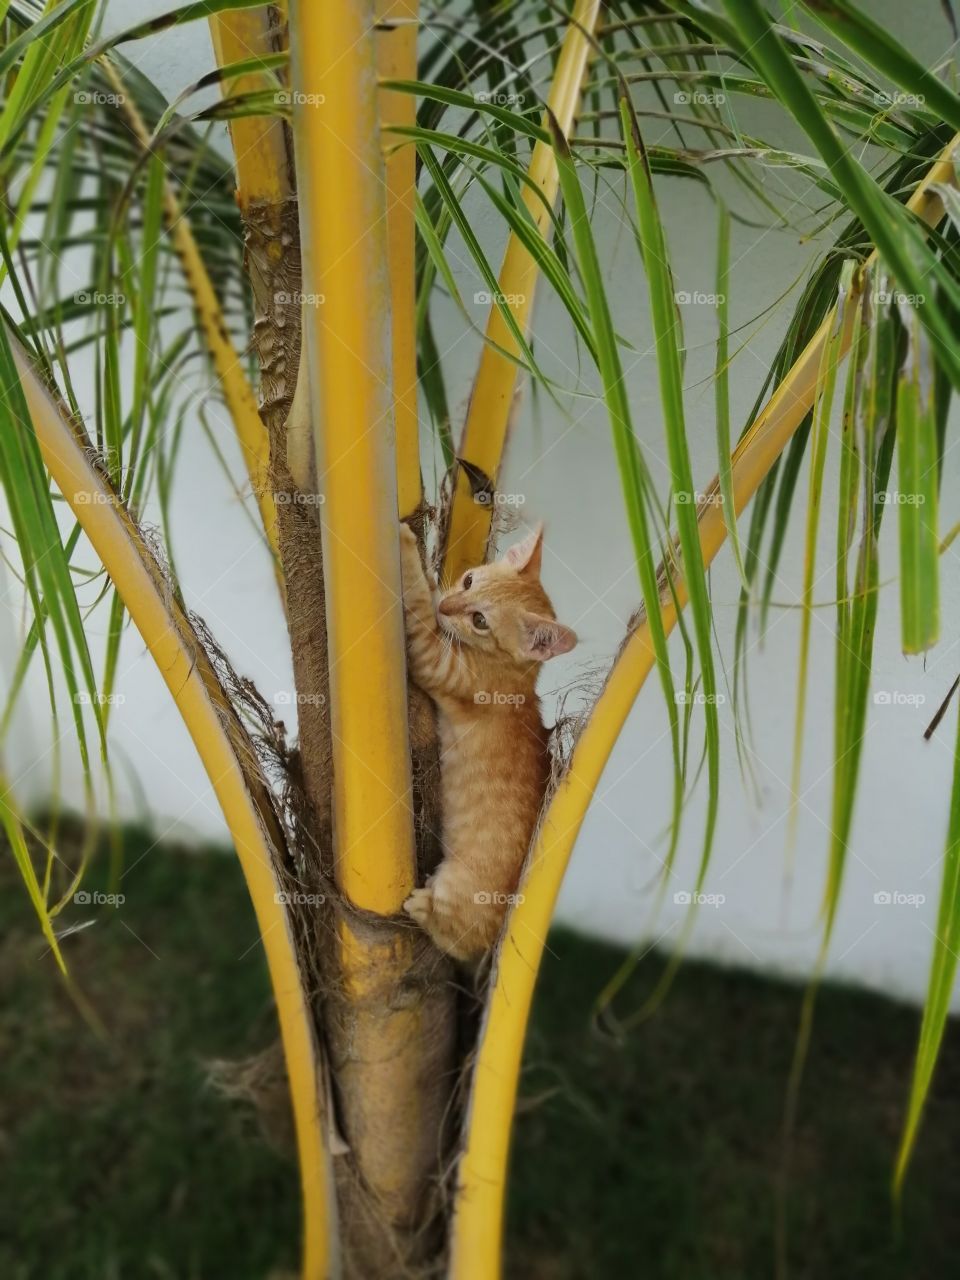 My sweet little kitten is climb on the coconut tree.. She's so nice.
She's my camera model.